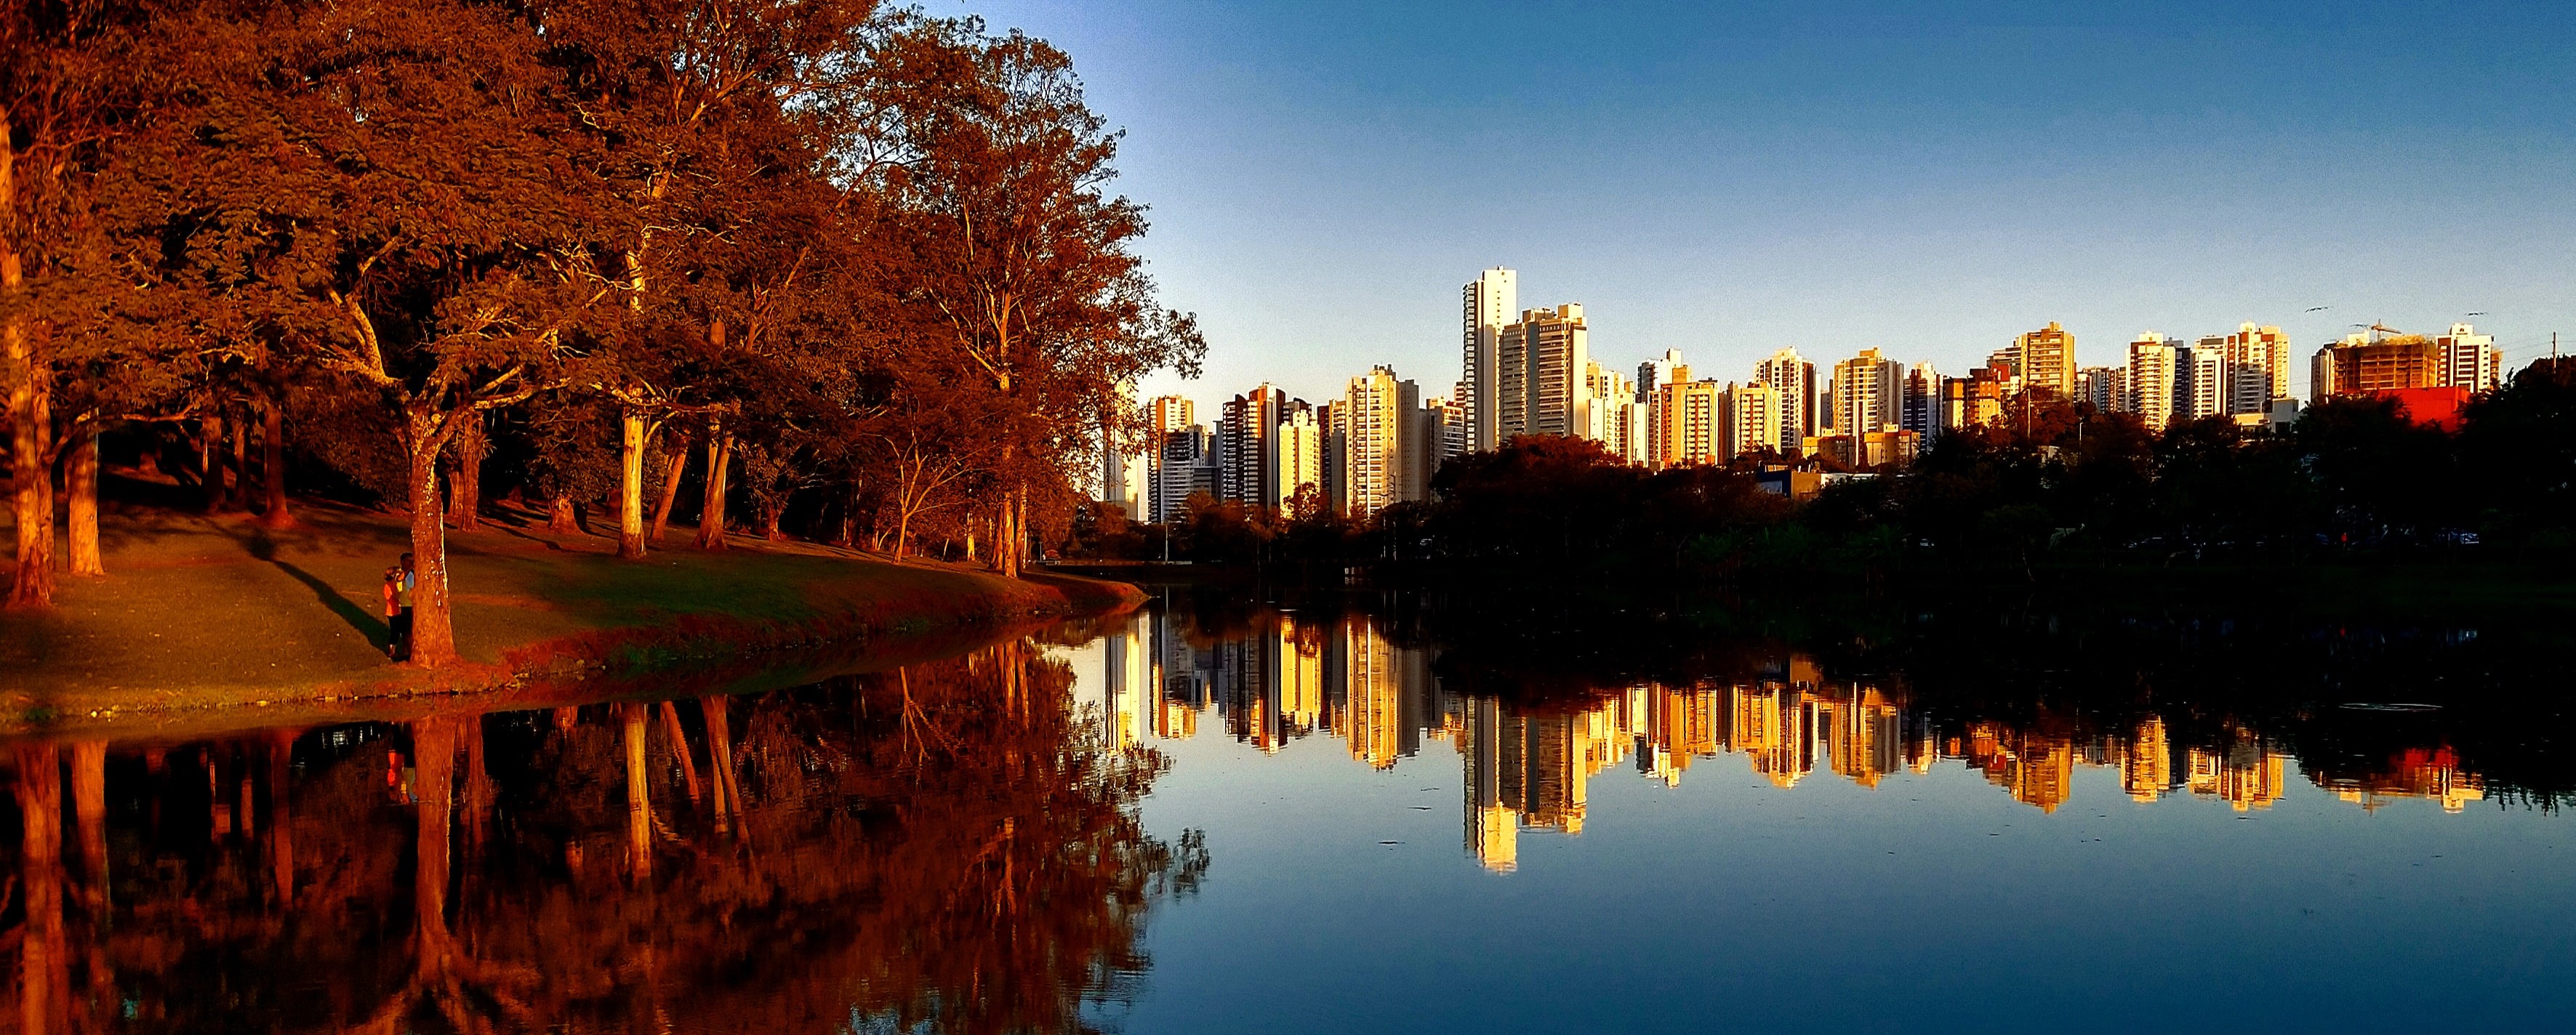 Londrina, paraná

lugares para viajar no Paraná